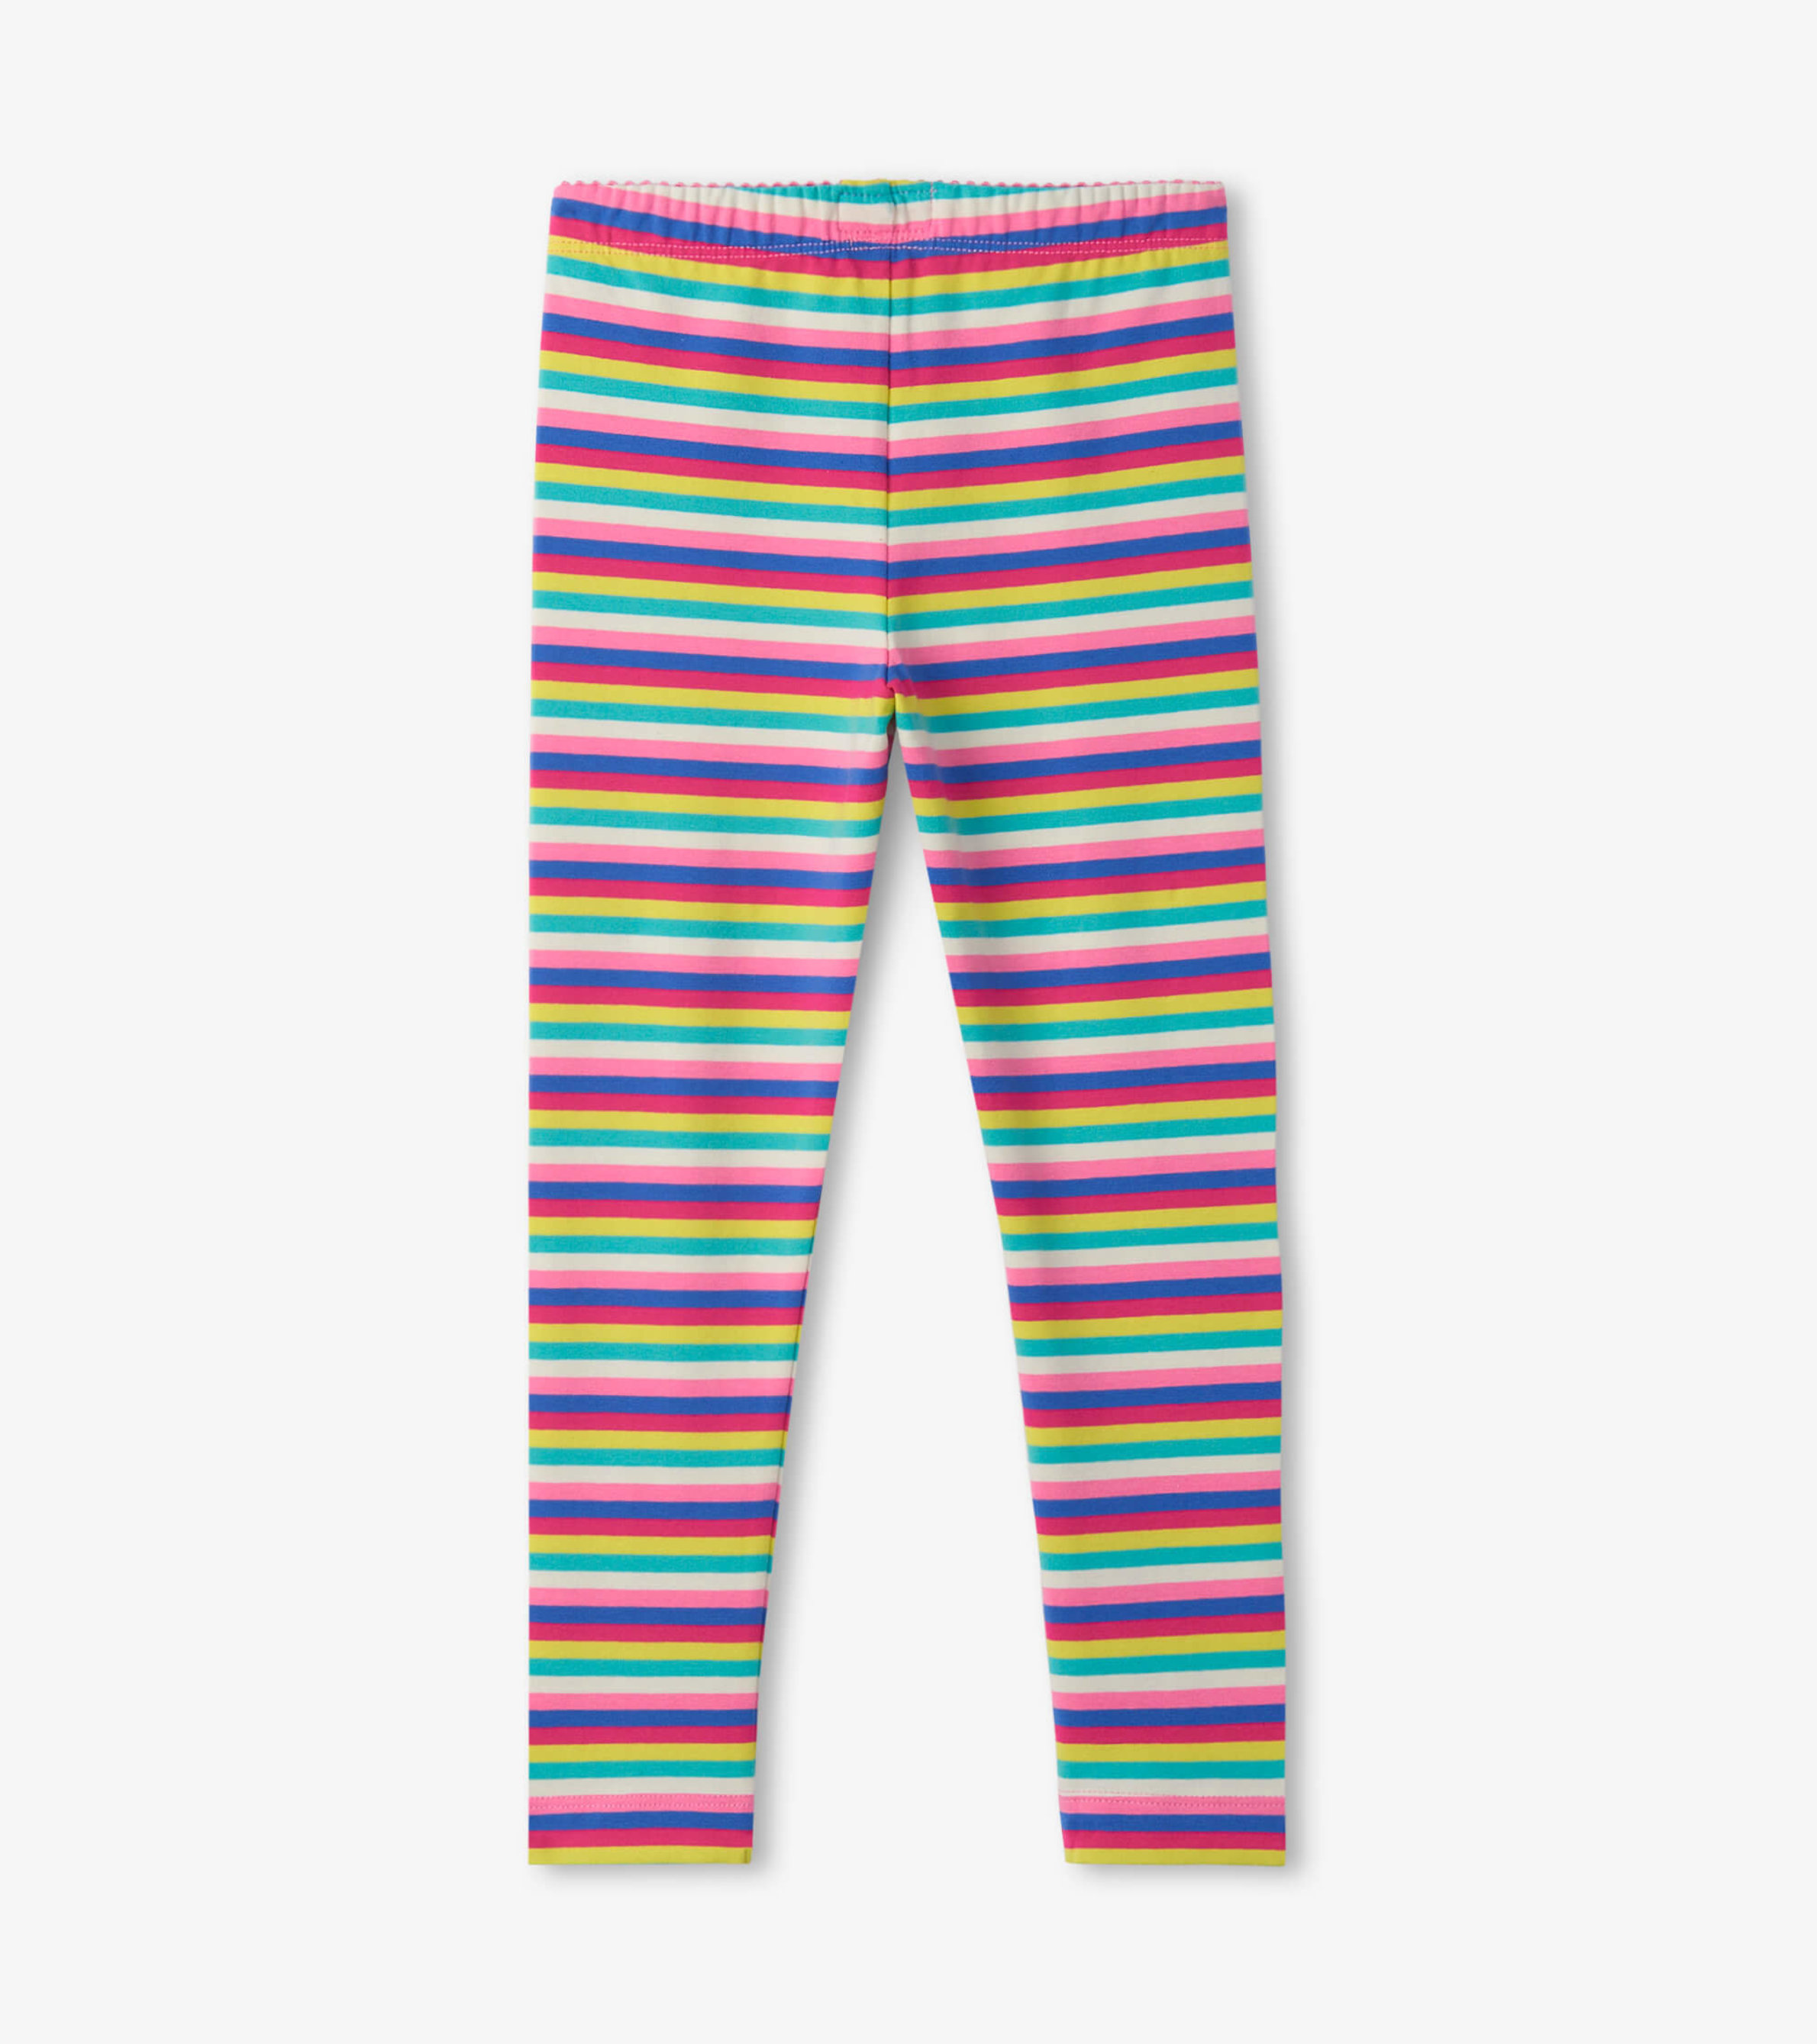 Horizontal rainbow stripes Leggings sold by RahuKumar | SKU 24930929 | 20%  OFF Printerval